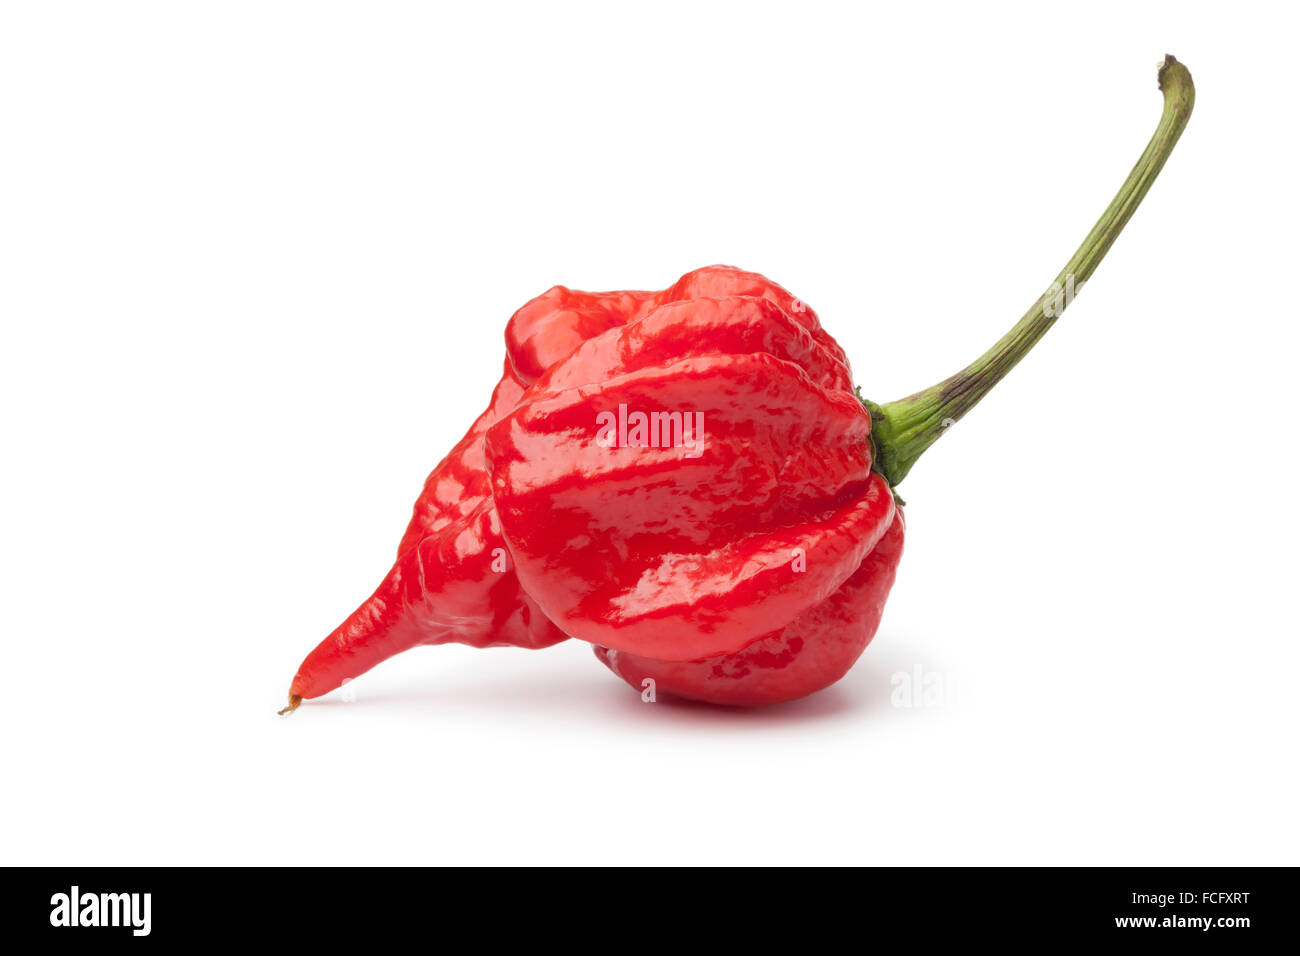 Single fresh red scorpion chili pepper on white background Stock Photo